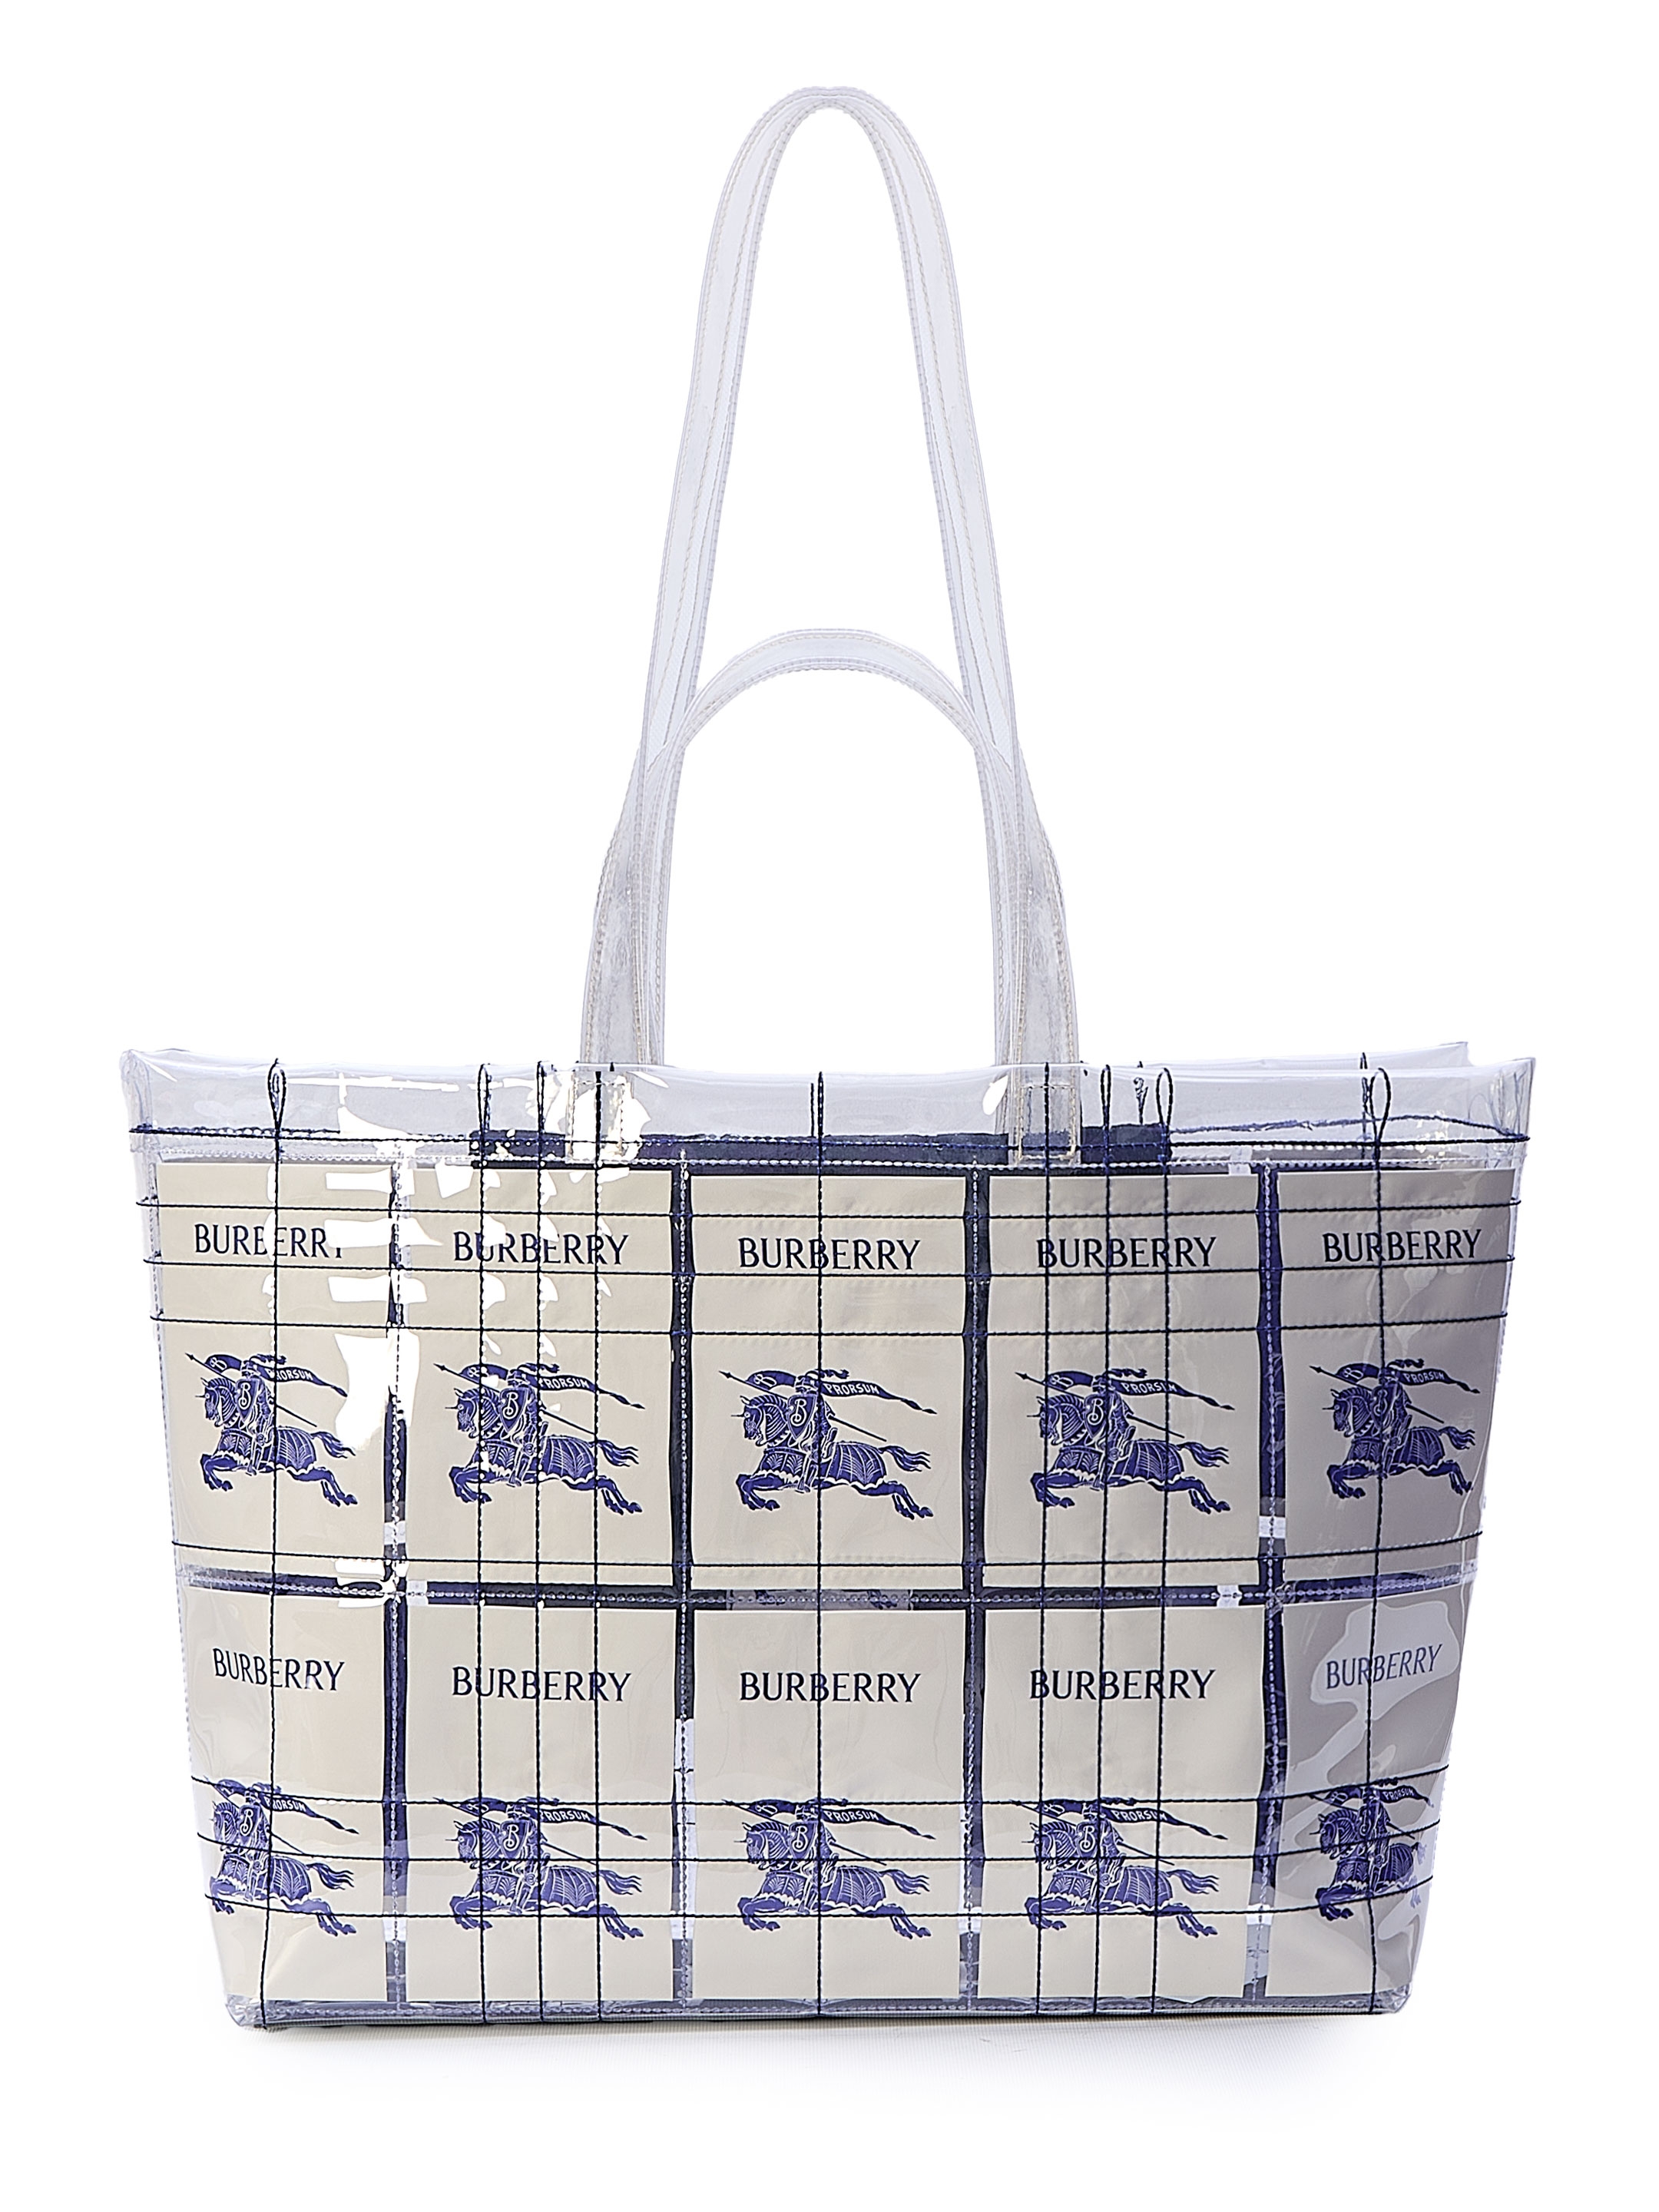 BURBERRY - EKD Label Tote Bag | Leam Roma - Luxury Shopping Online